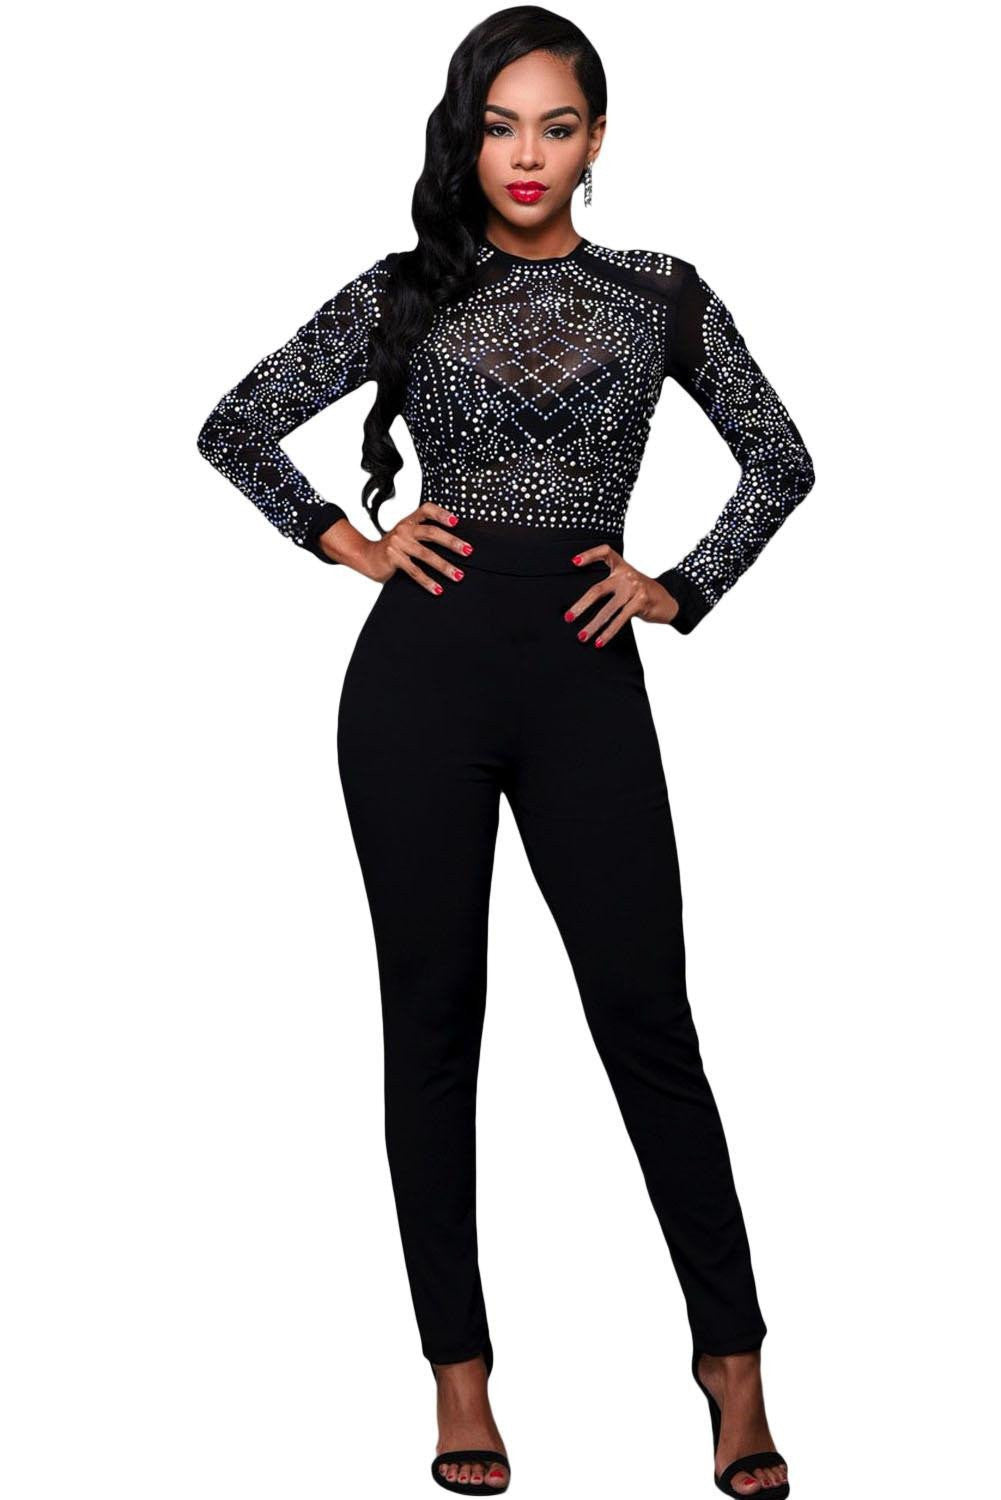 Women Full Length Solid Black Long Sleeves Rhinestone Mesh Bodice Formfitting Jumpsuit long